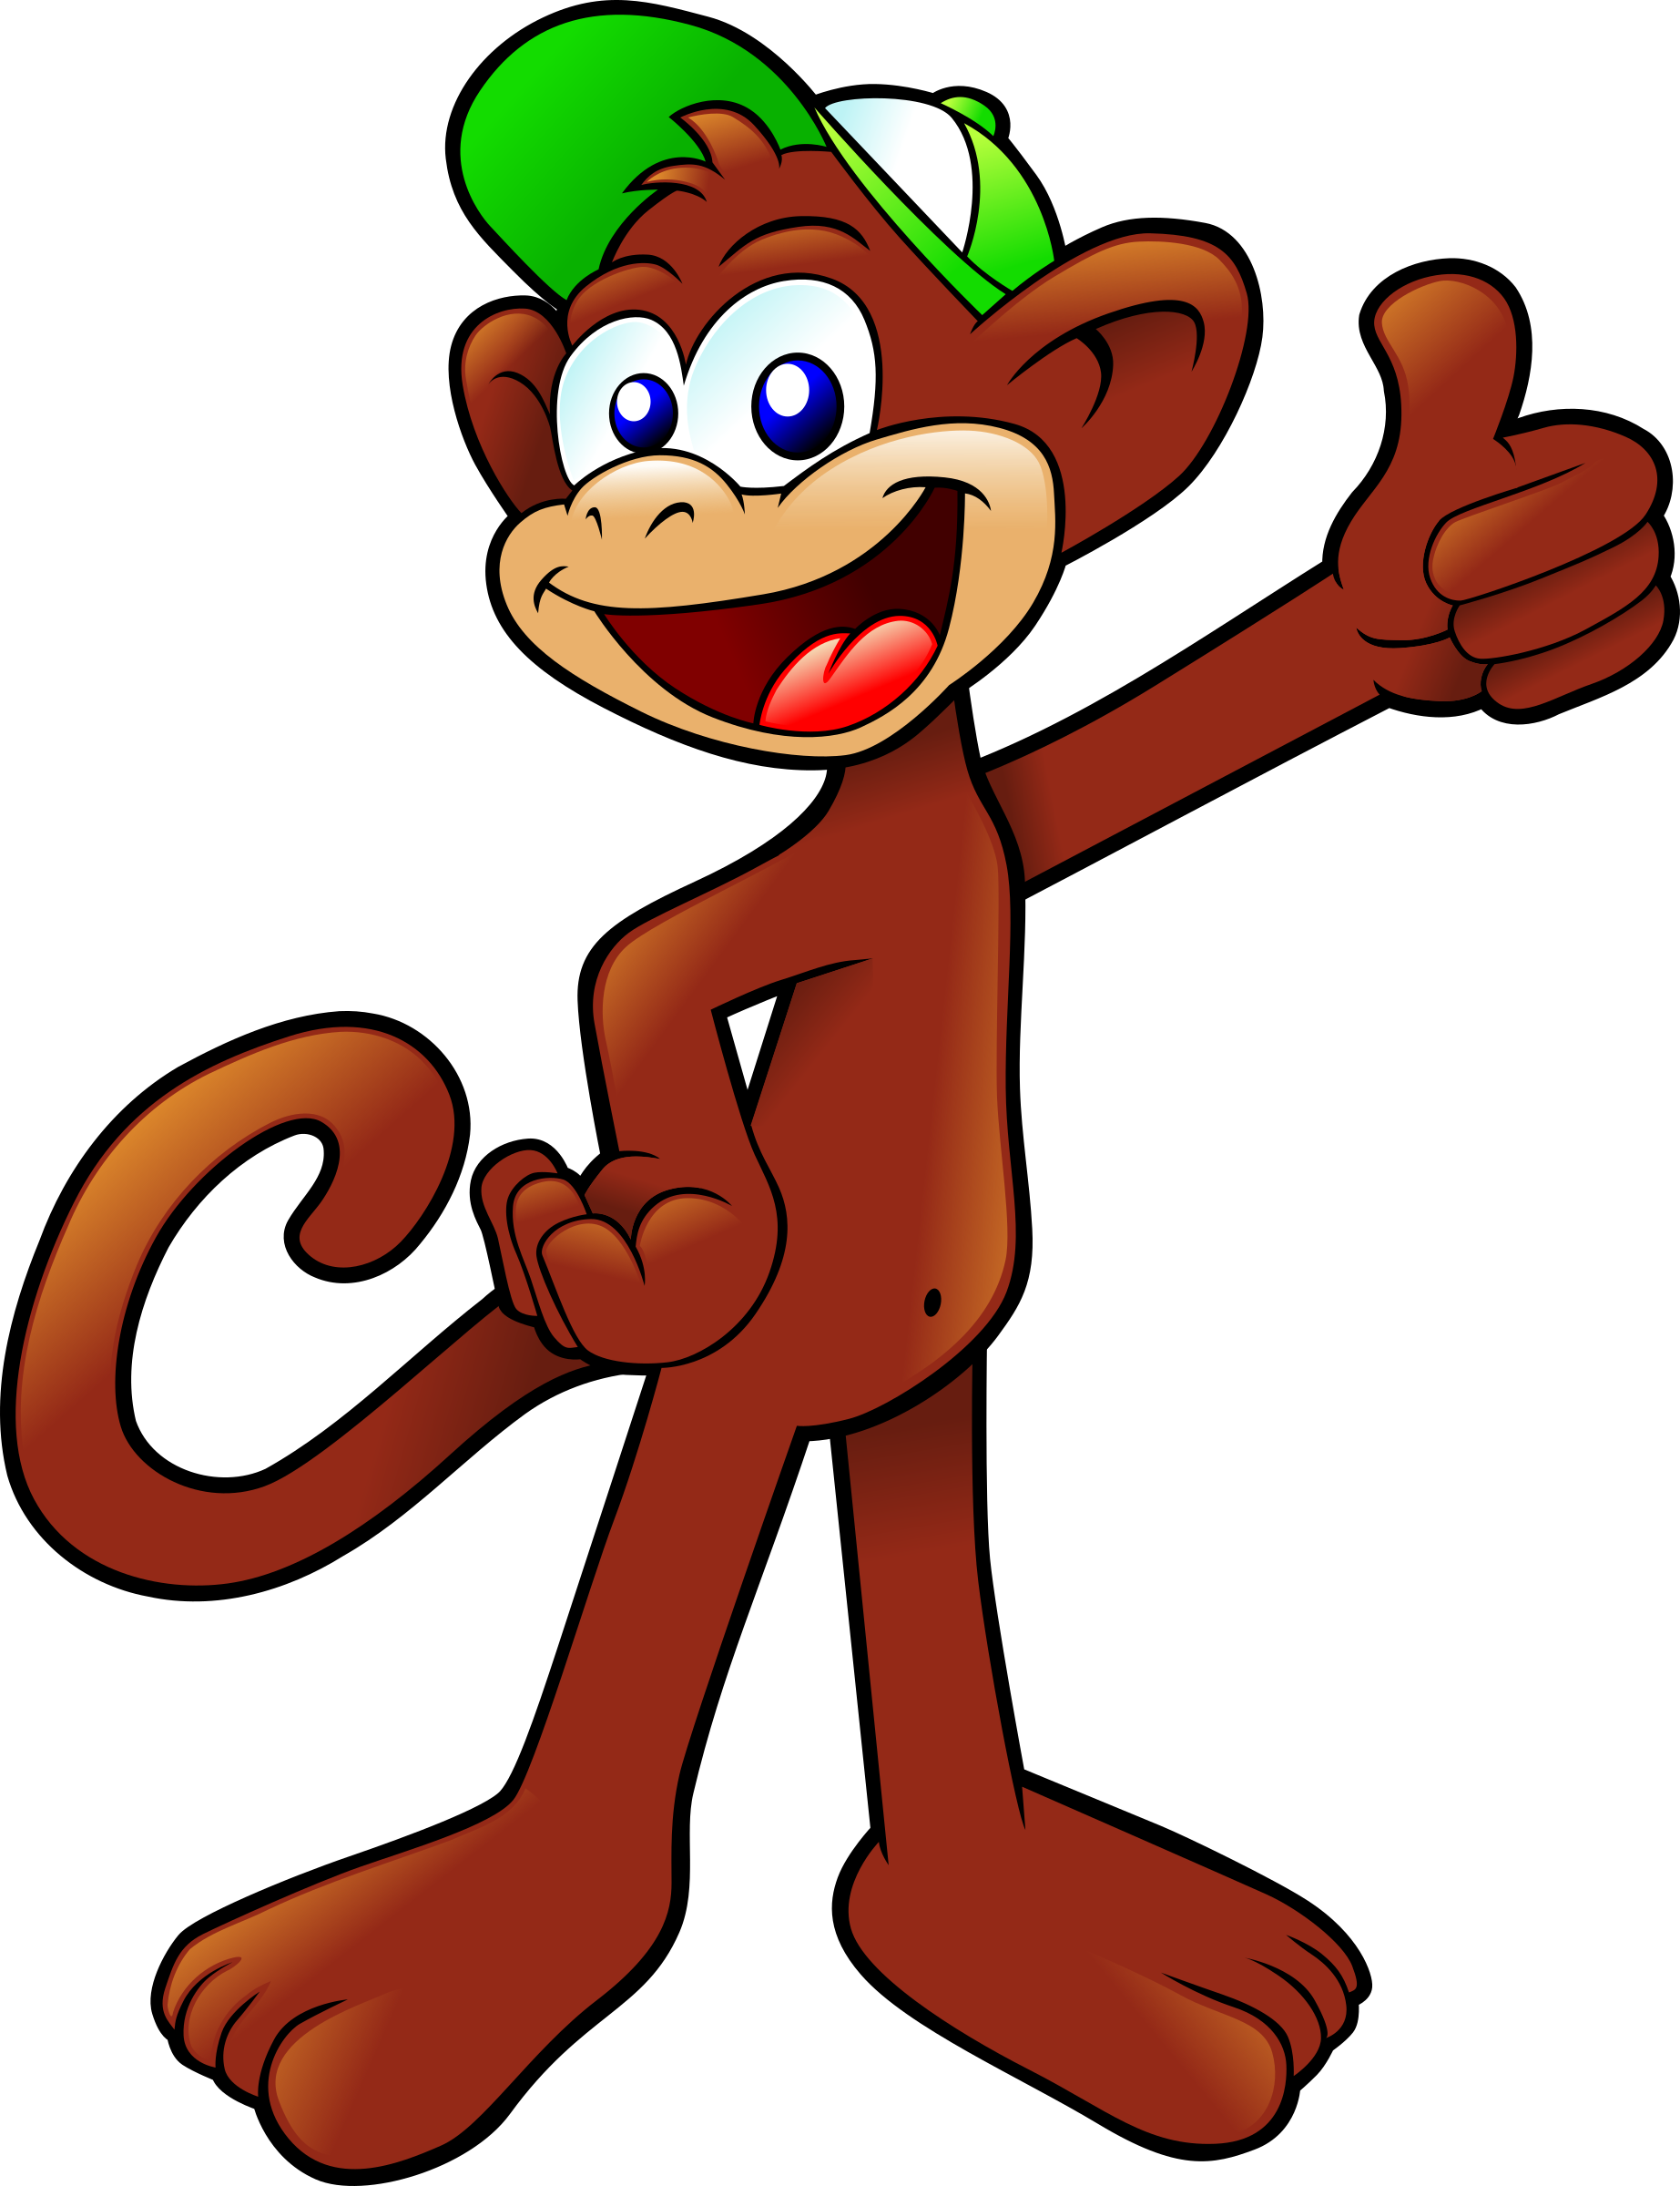 Medium Image - Cartoon Monkey With Cap (1845x2400)